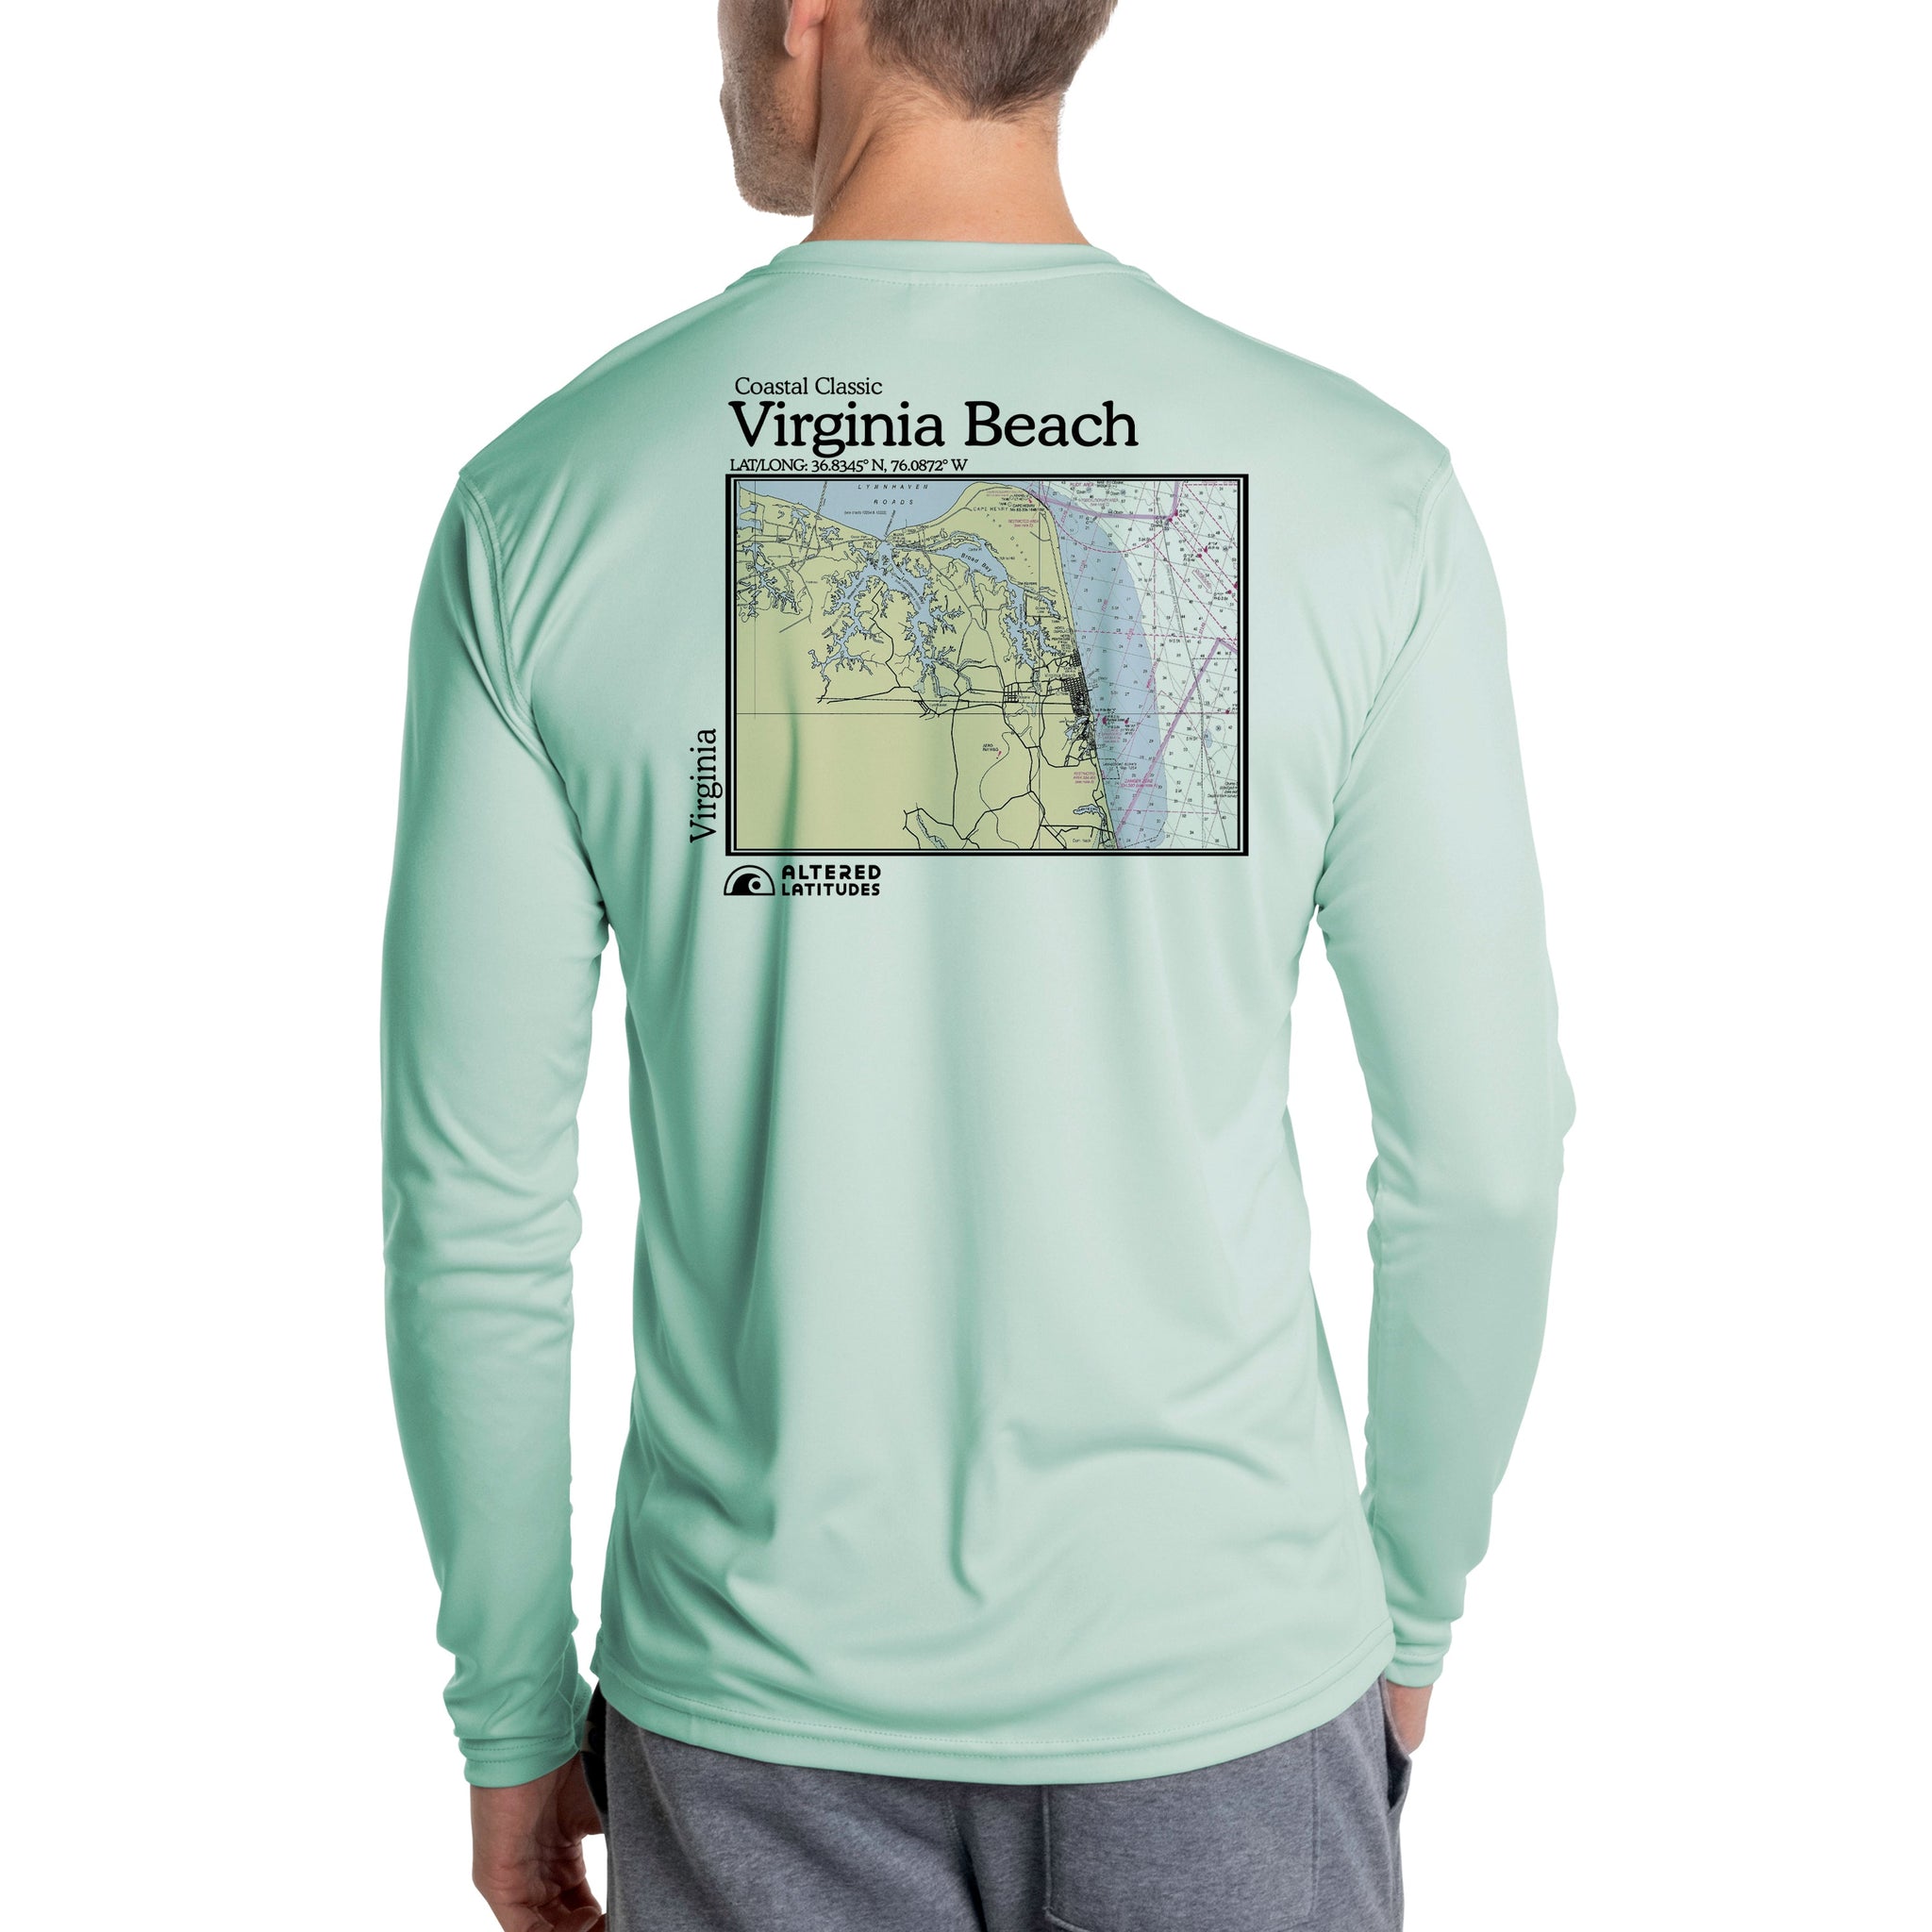 Coastal Classics Virginia Beach Men's UPF 50 Long Sleeve